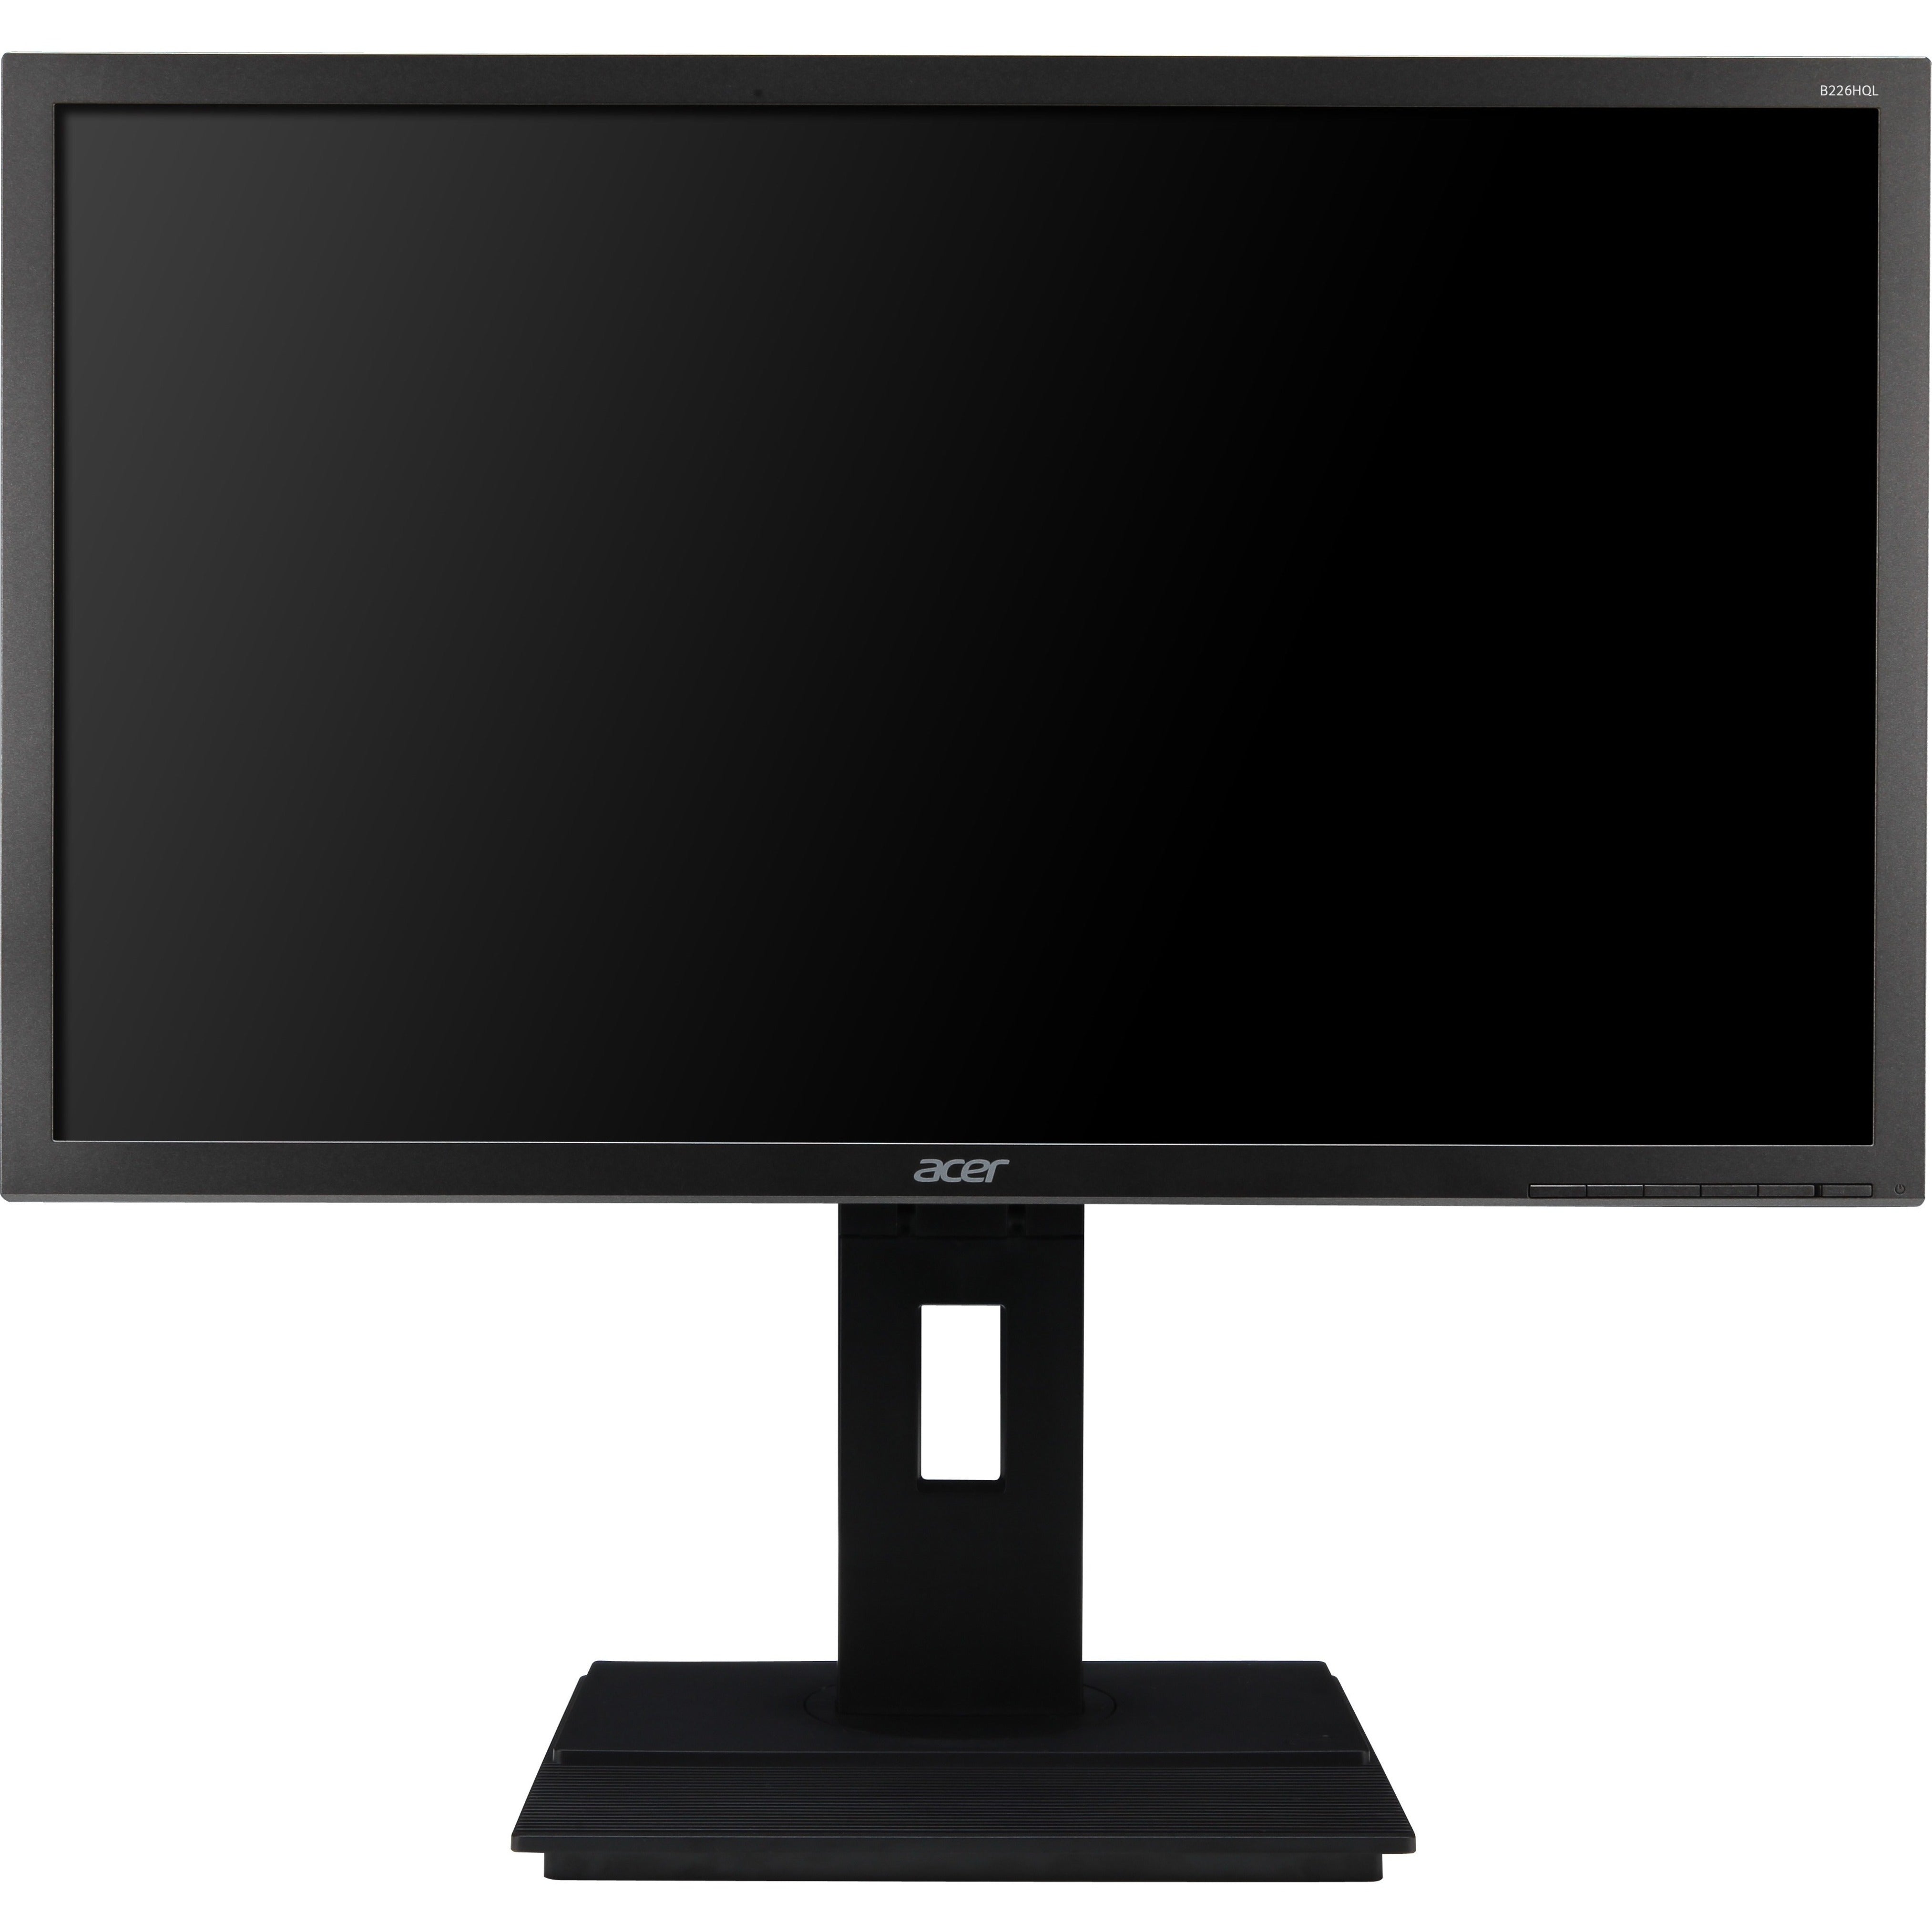 Acer UM.WB6AA.003 B226HQL Widescreen LCD Monitor, 21.5 Full HD, 5ms Response Time, Dark Gray